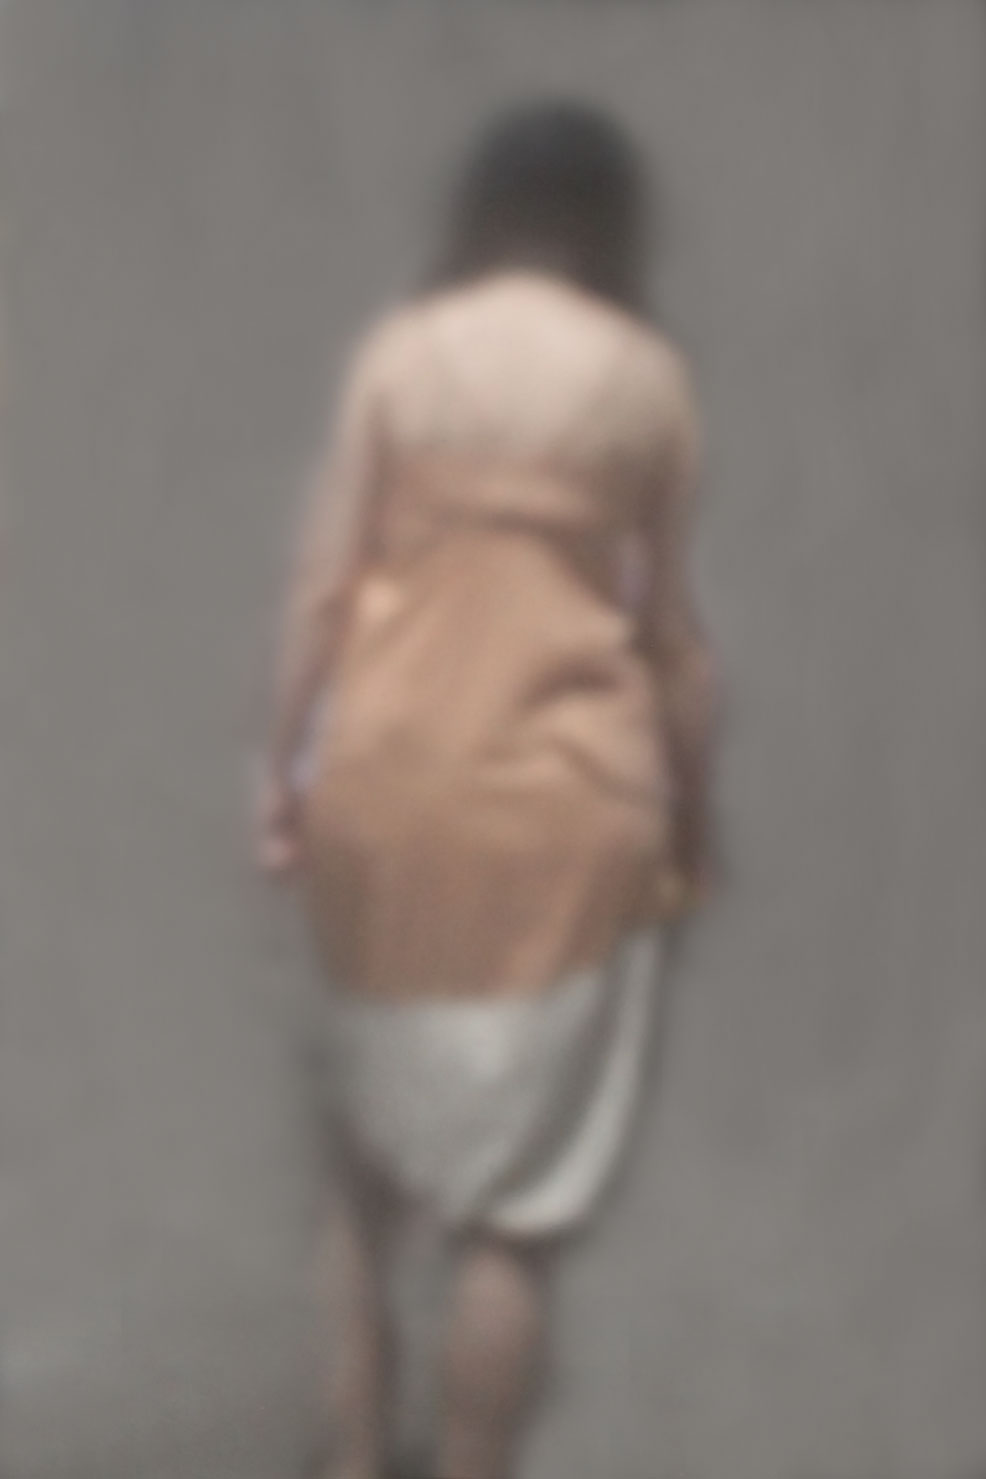 40 „Faltenwurf im zarten Rosa“, 2012, New York, Camera Obscura, Pigmentdruck auf Alu-Dibond